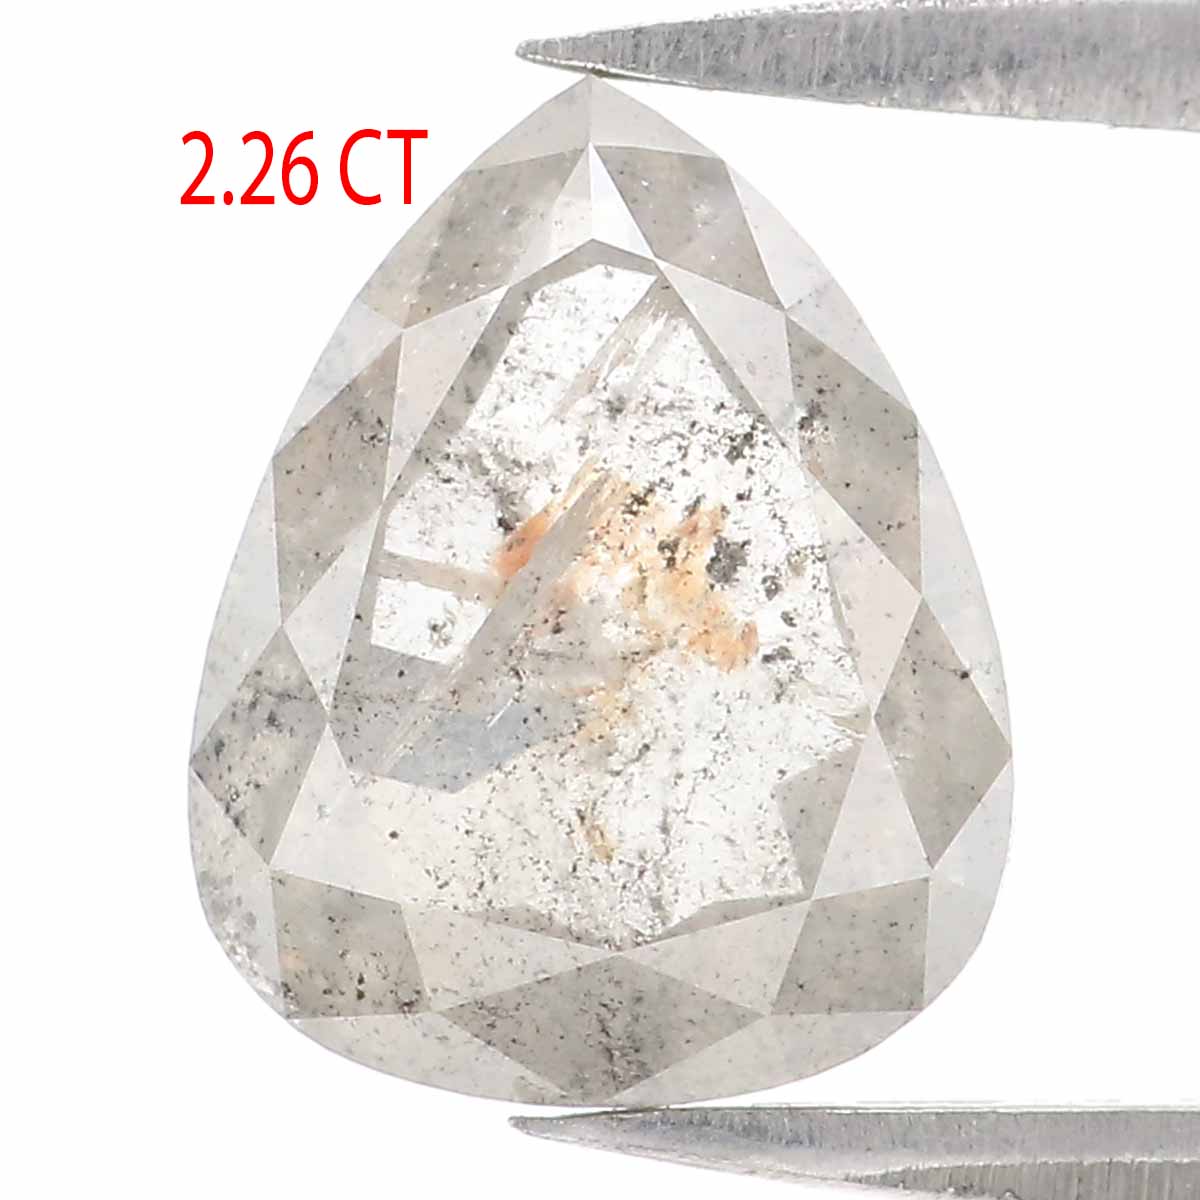 2.26 CT Natural Loose Pear Diamond Grey Color Pear Cut Diamond 9.30 MM Natural Loose Salt And Pepper Diamond Pear Rose Cut Diamond QL2489